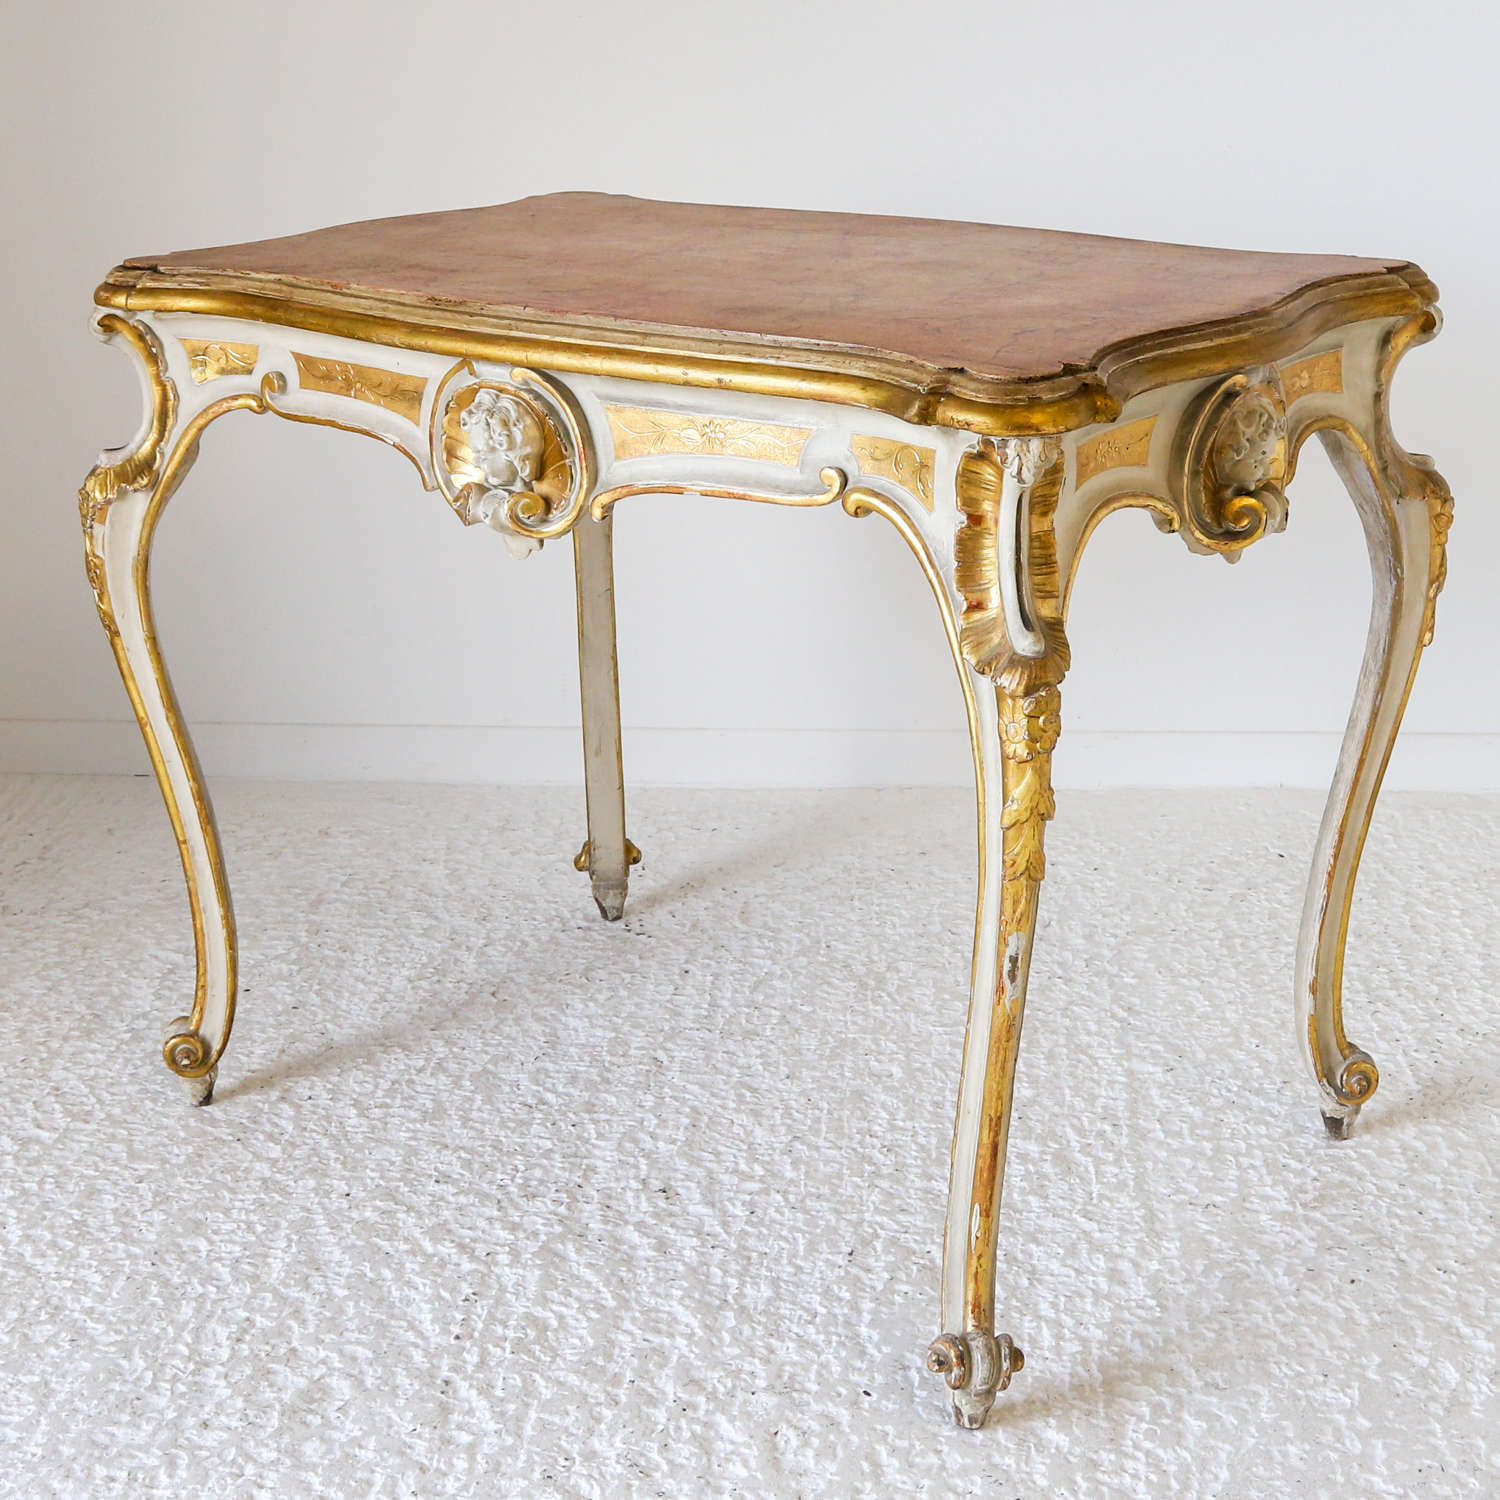 French 19th C c1860 Decorative Parcel-gilt Console/Centre Table